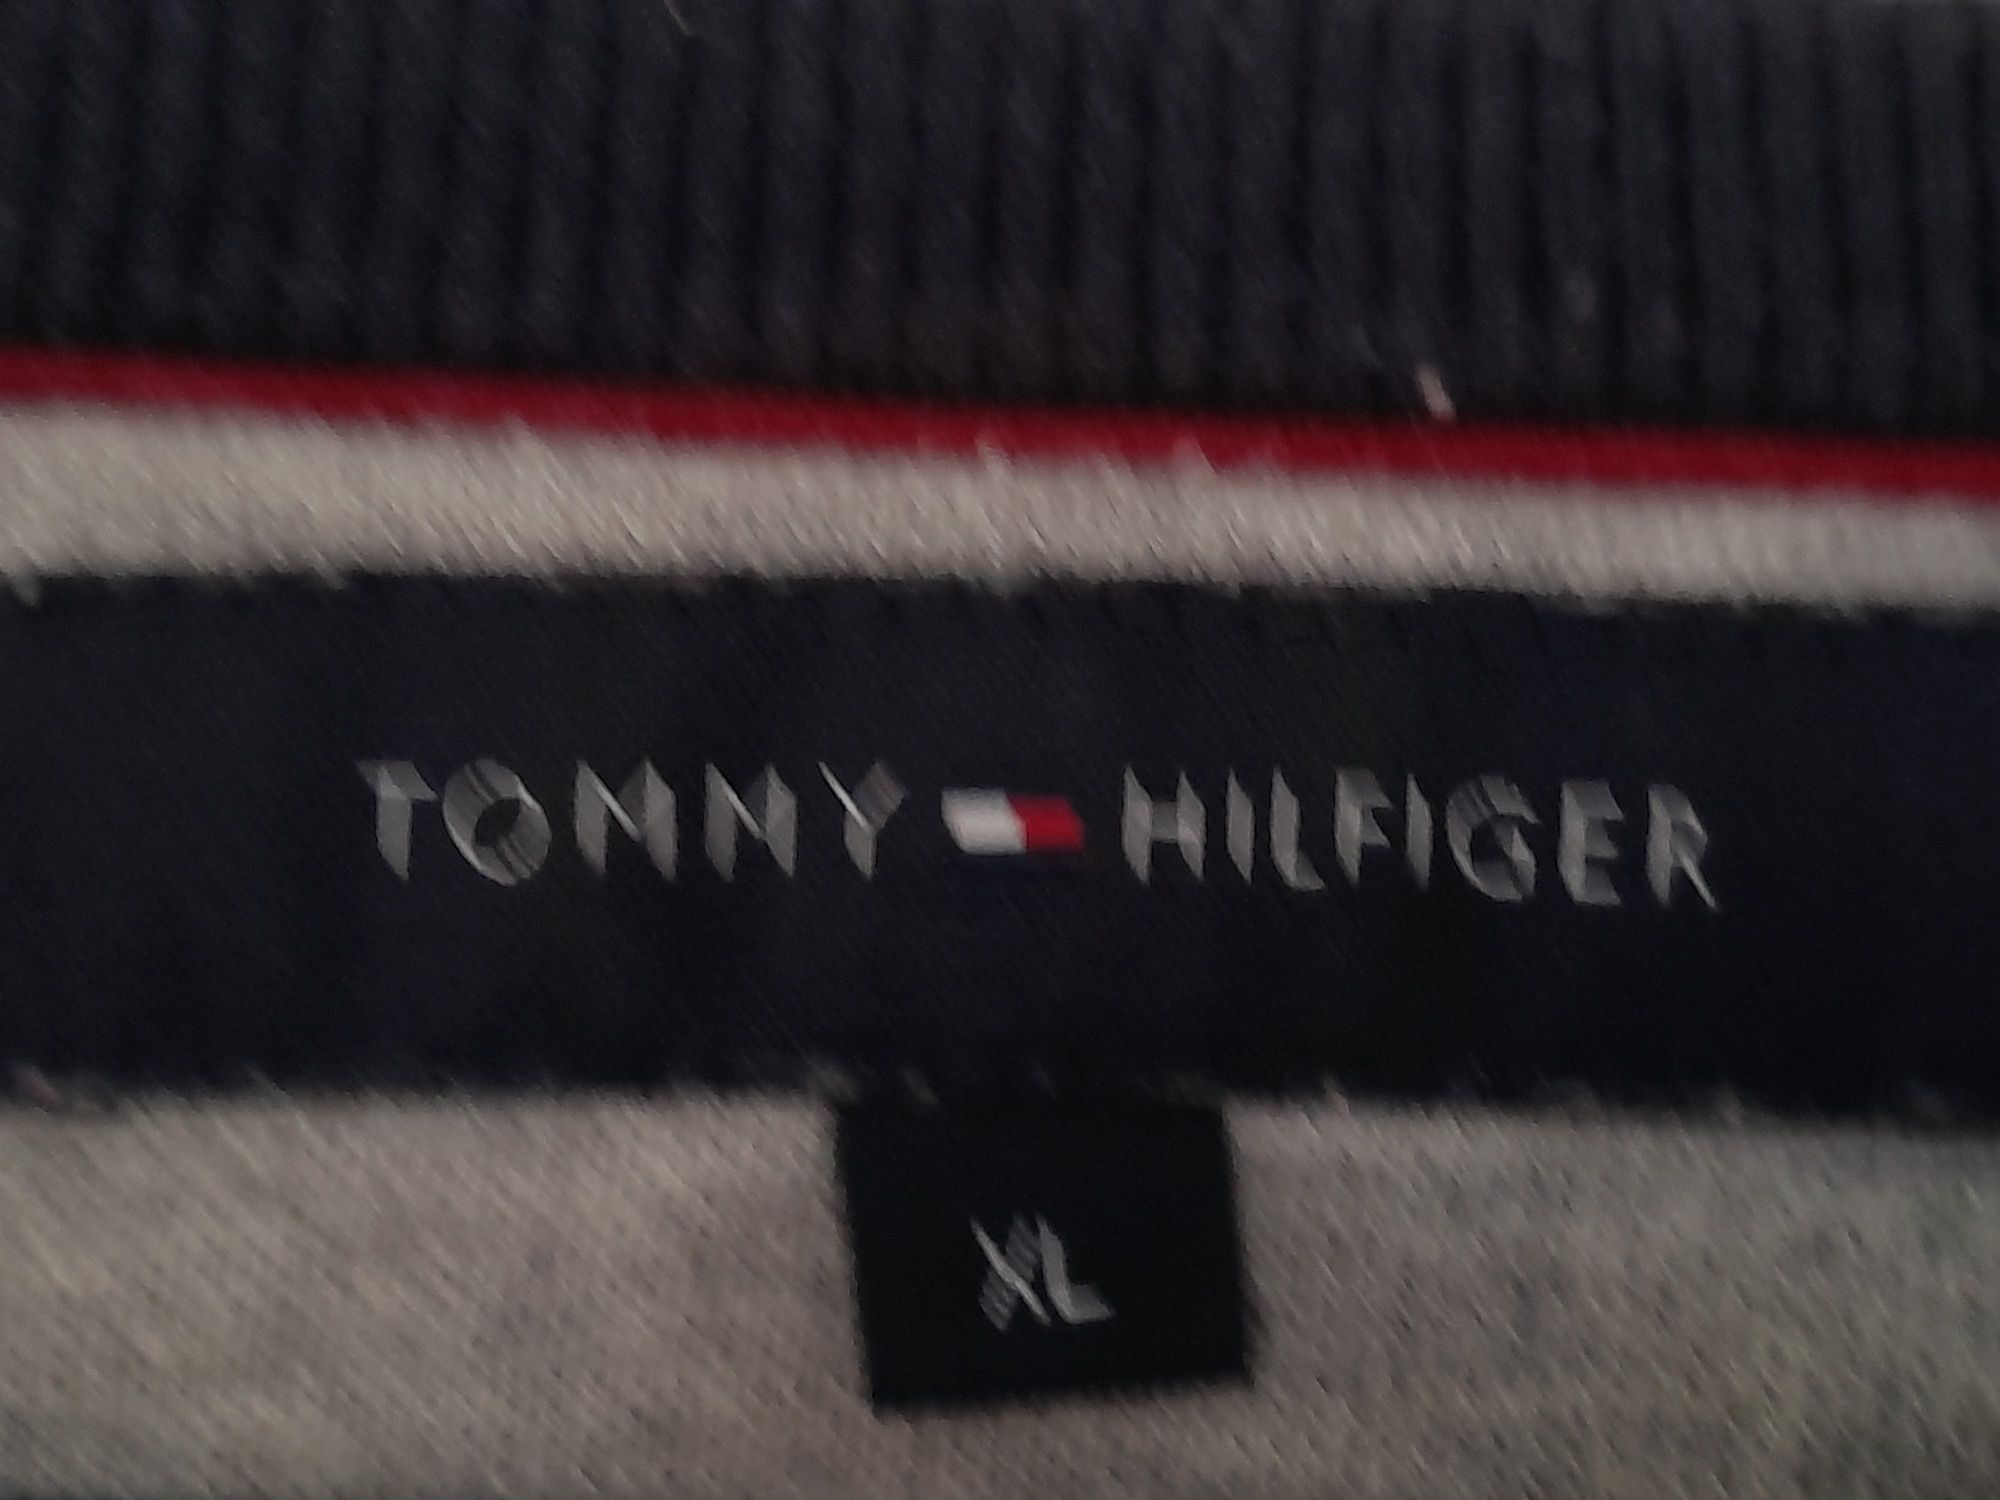 Pulover Tommy Hilfiger bărbătesc